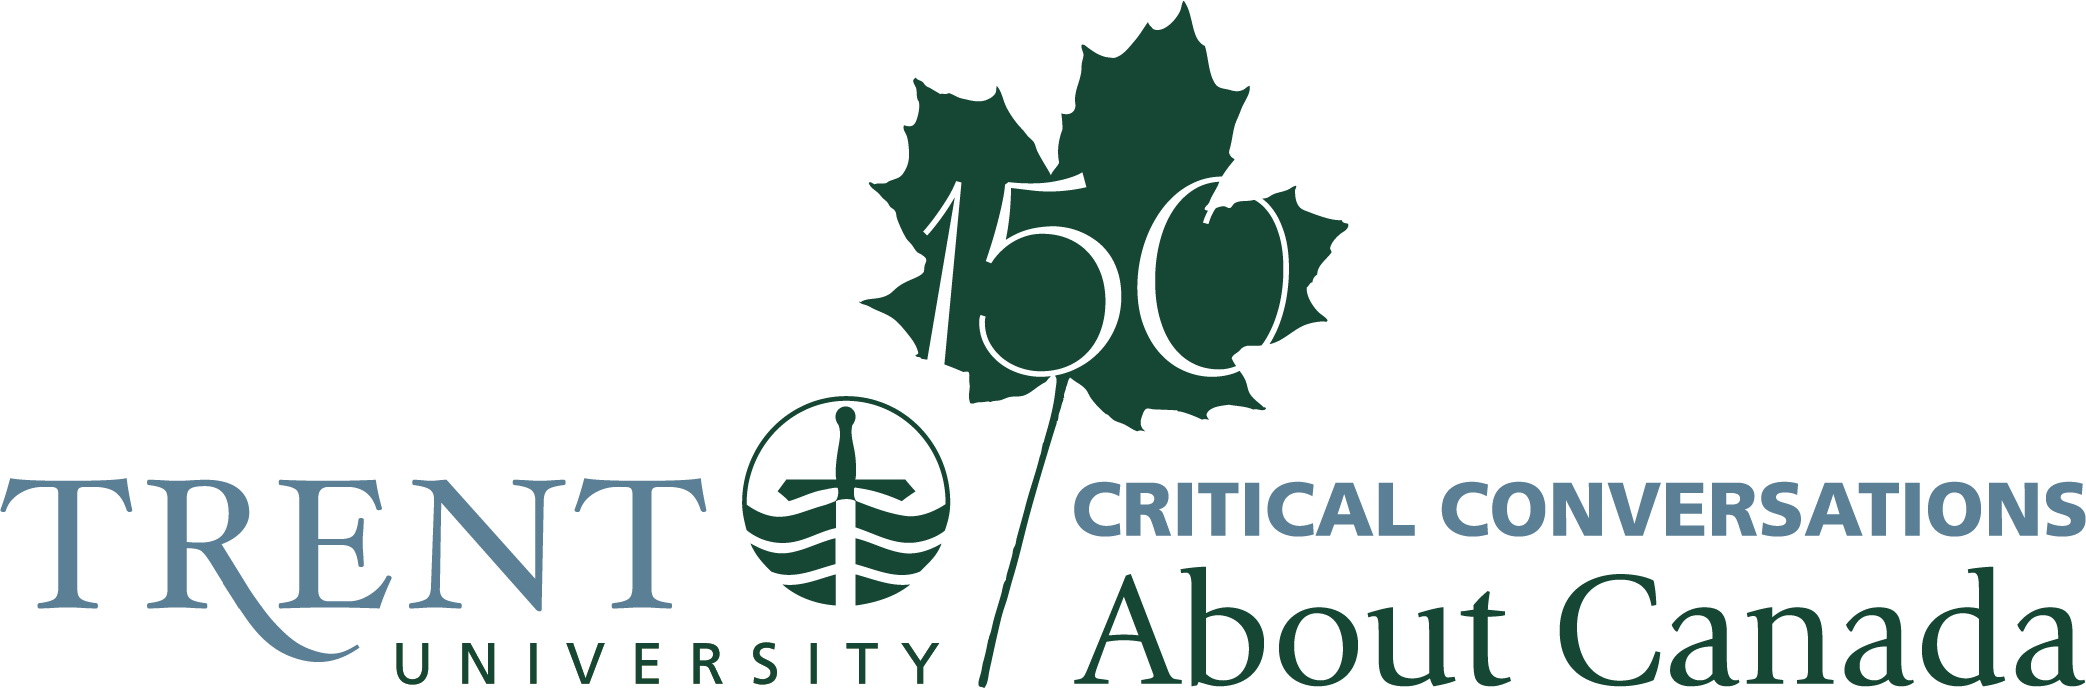 Trent University Canada 150 - Critical Conversations About Canada logo